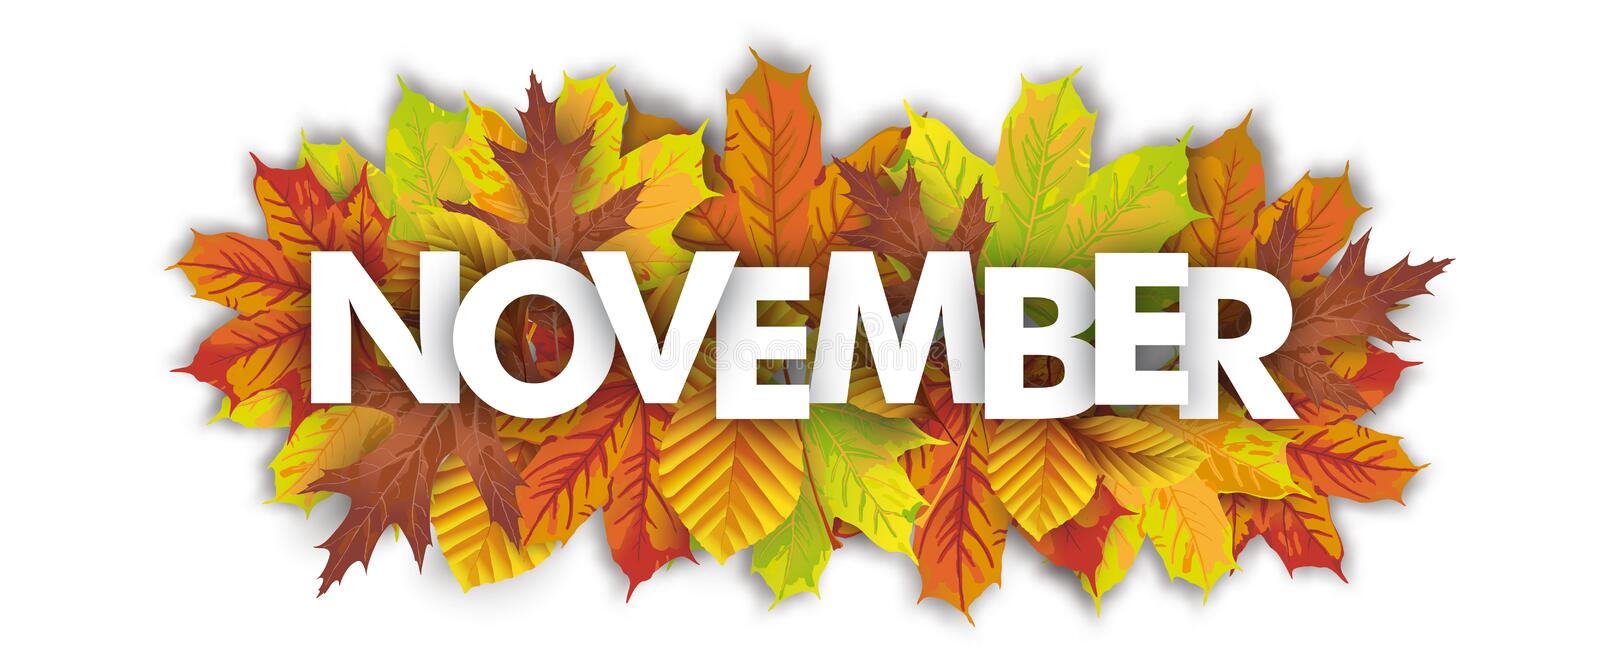 autumn-foliage-november-header-white-background-autumn-foliage-white-background-text-november-102402967.jpg